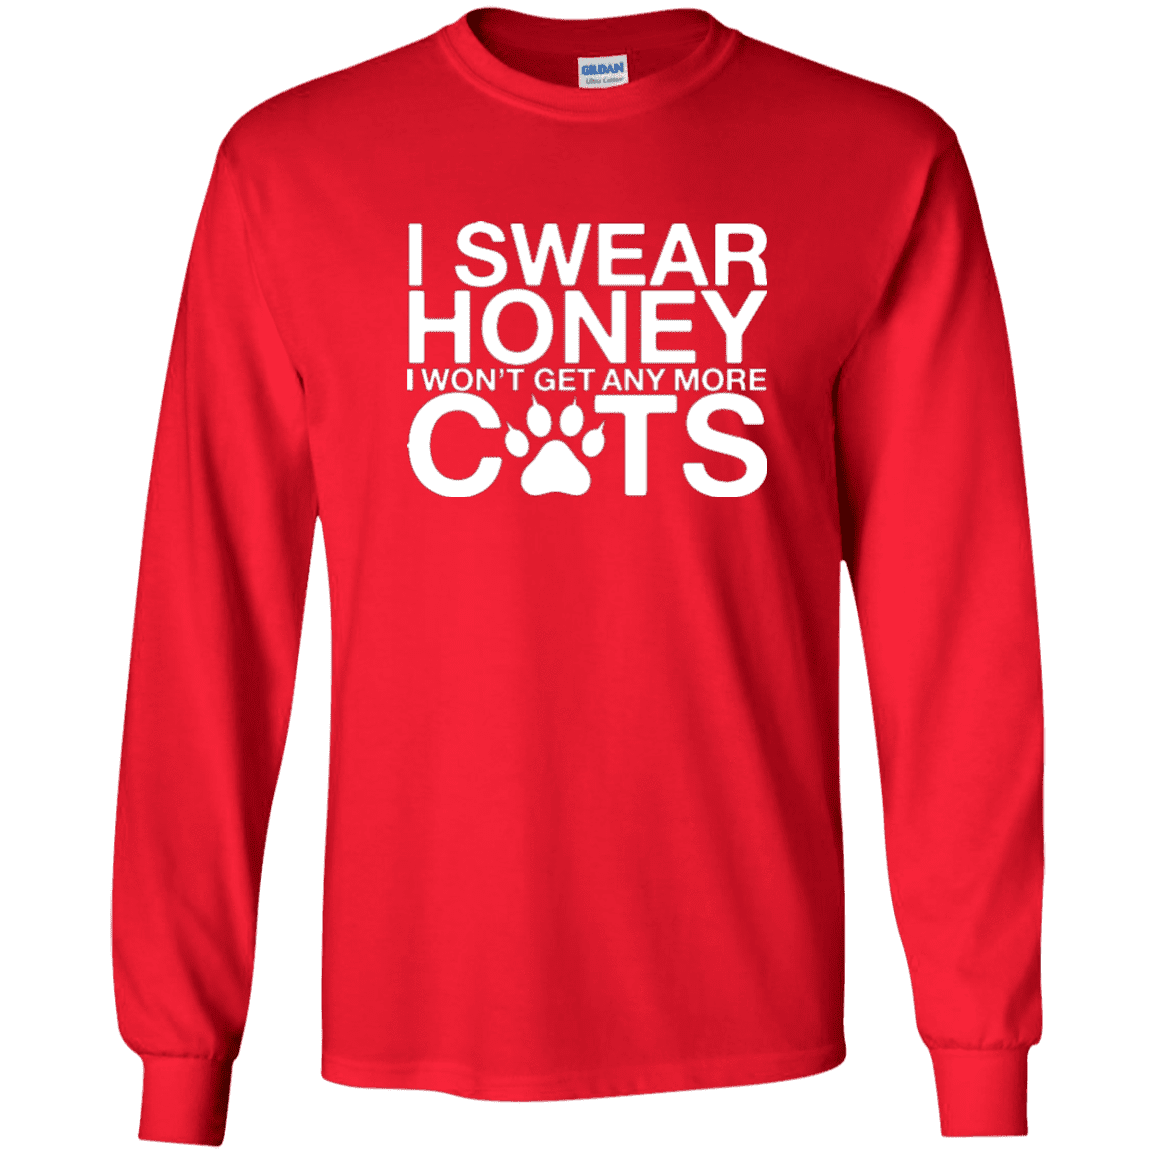 I Swear No More Cats - Long Sleeve T-Shirt.